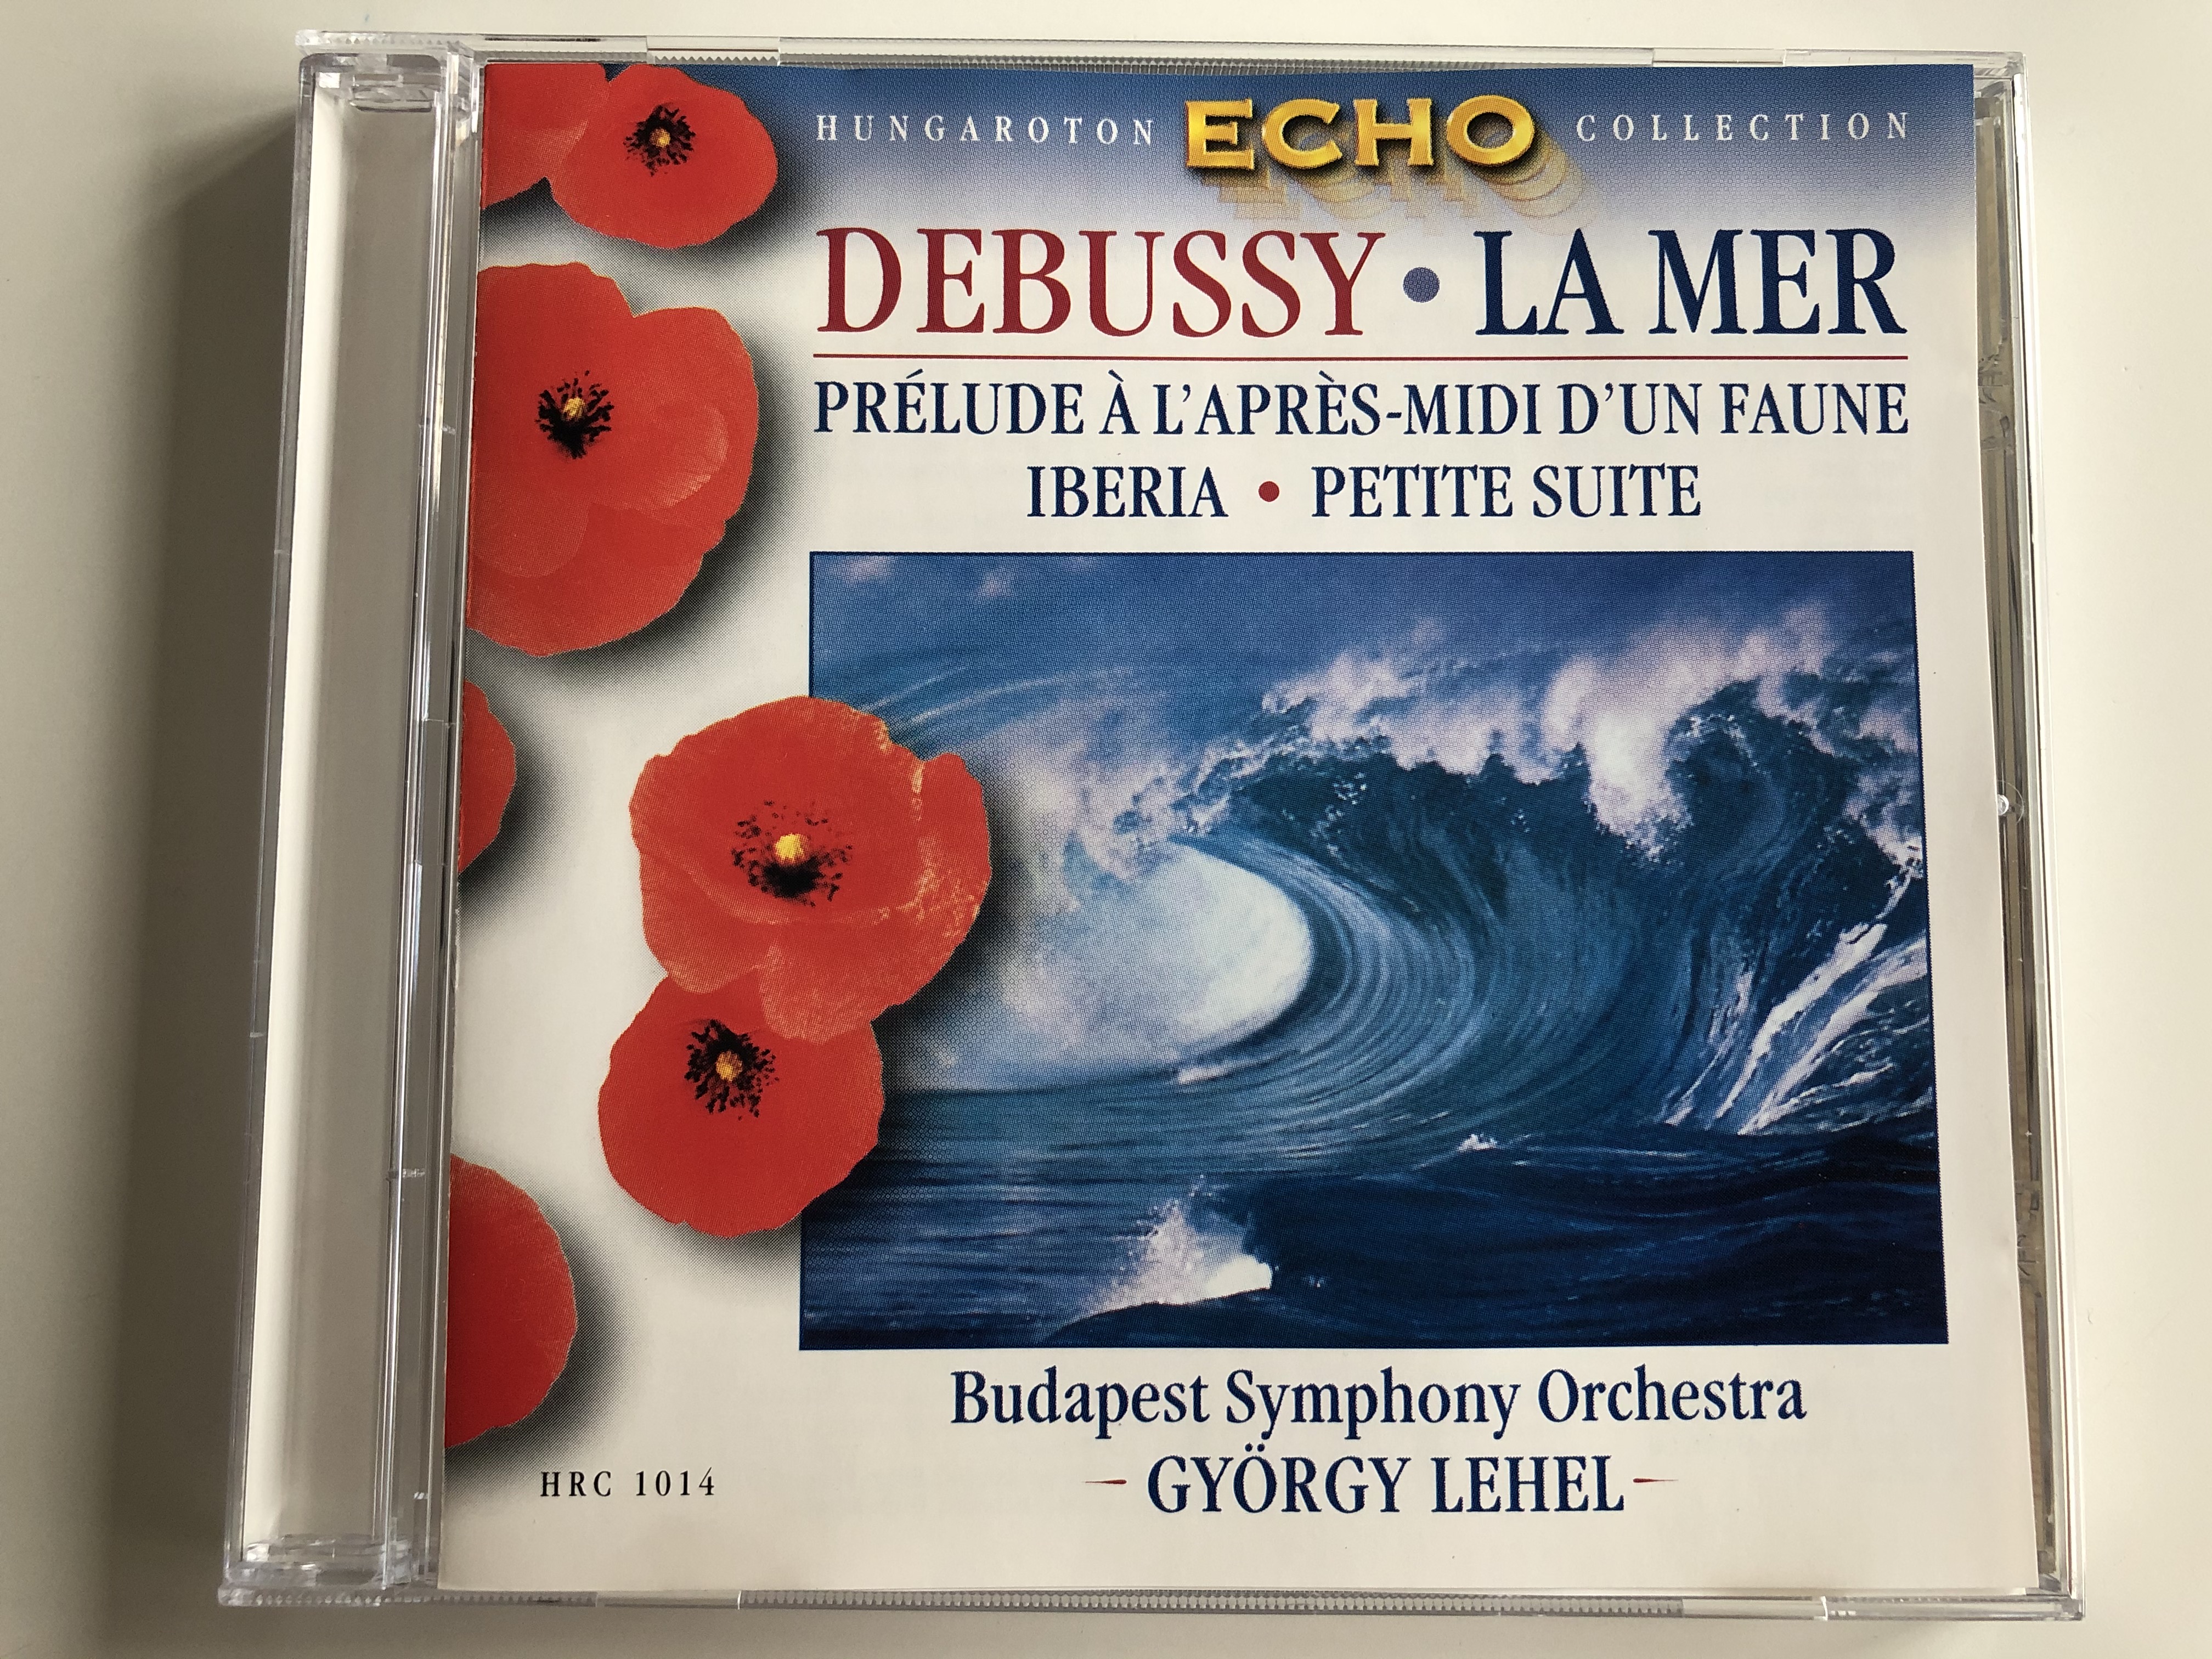 debussy-la-mer-pr-lude-l-apr-s-midi-d-un-faune-iberia-petite-suite-budapest-symphony-orchestra-gy-rgy-lehel-hungaroton-classic-audio-cd-1999-stereo-hrc-1014-1-.jpg